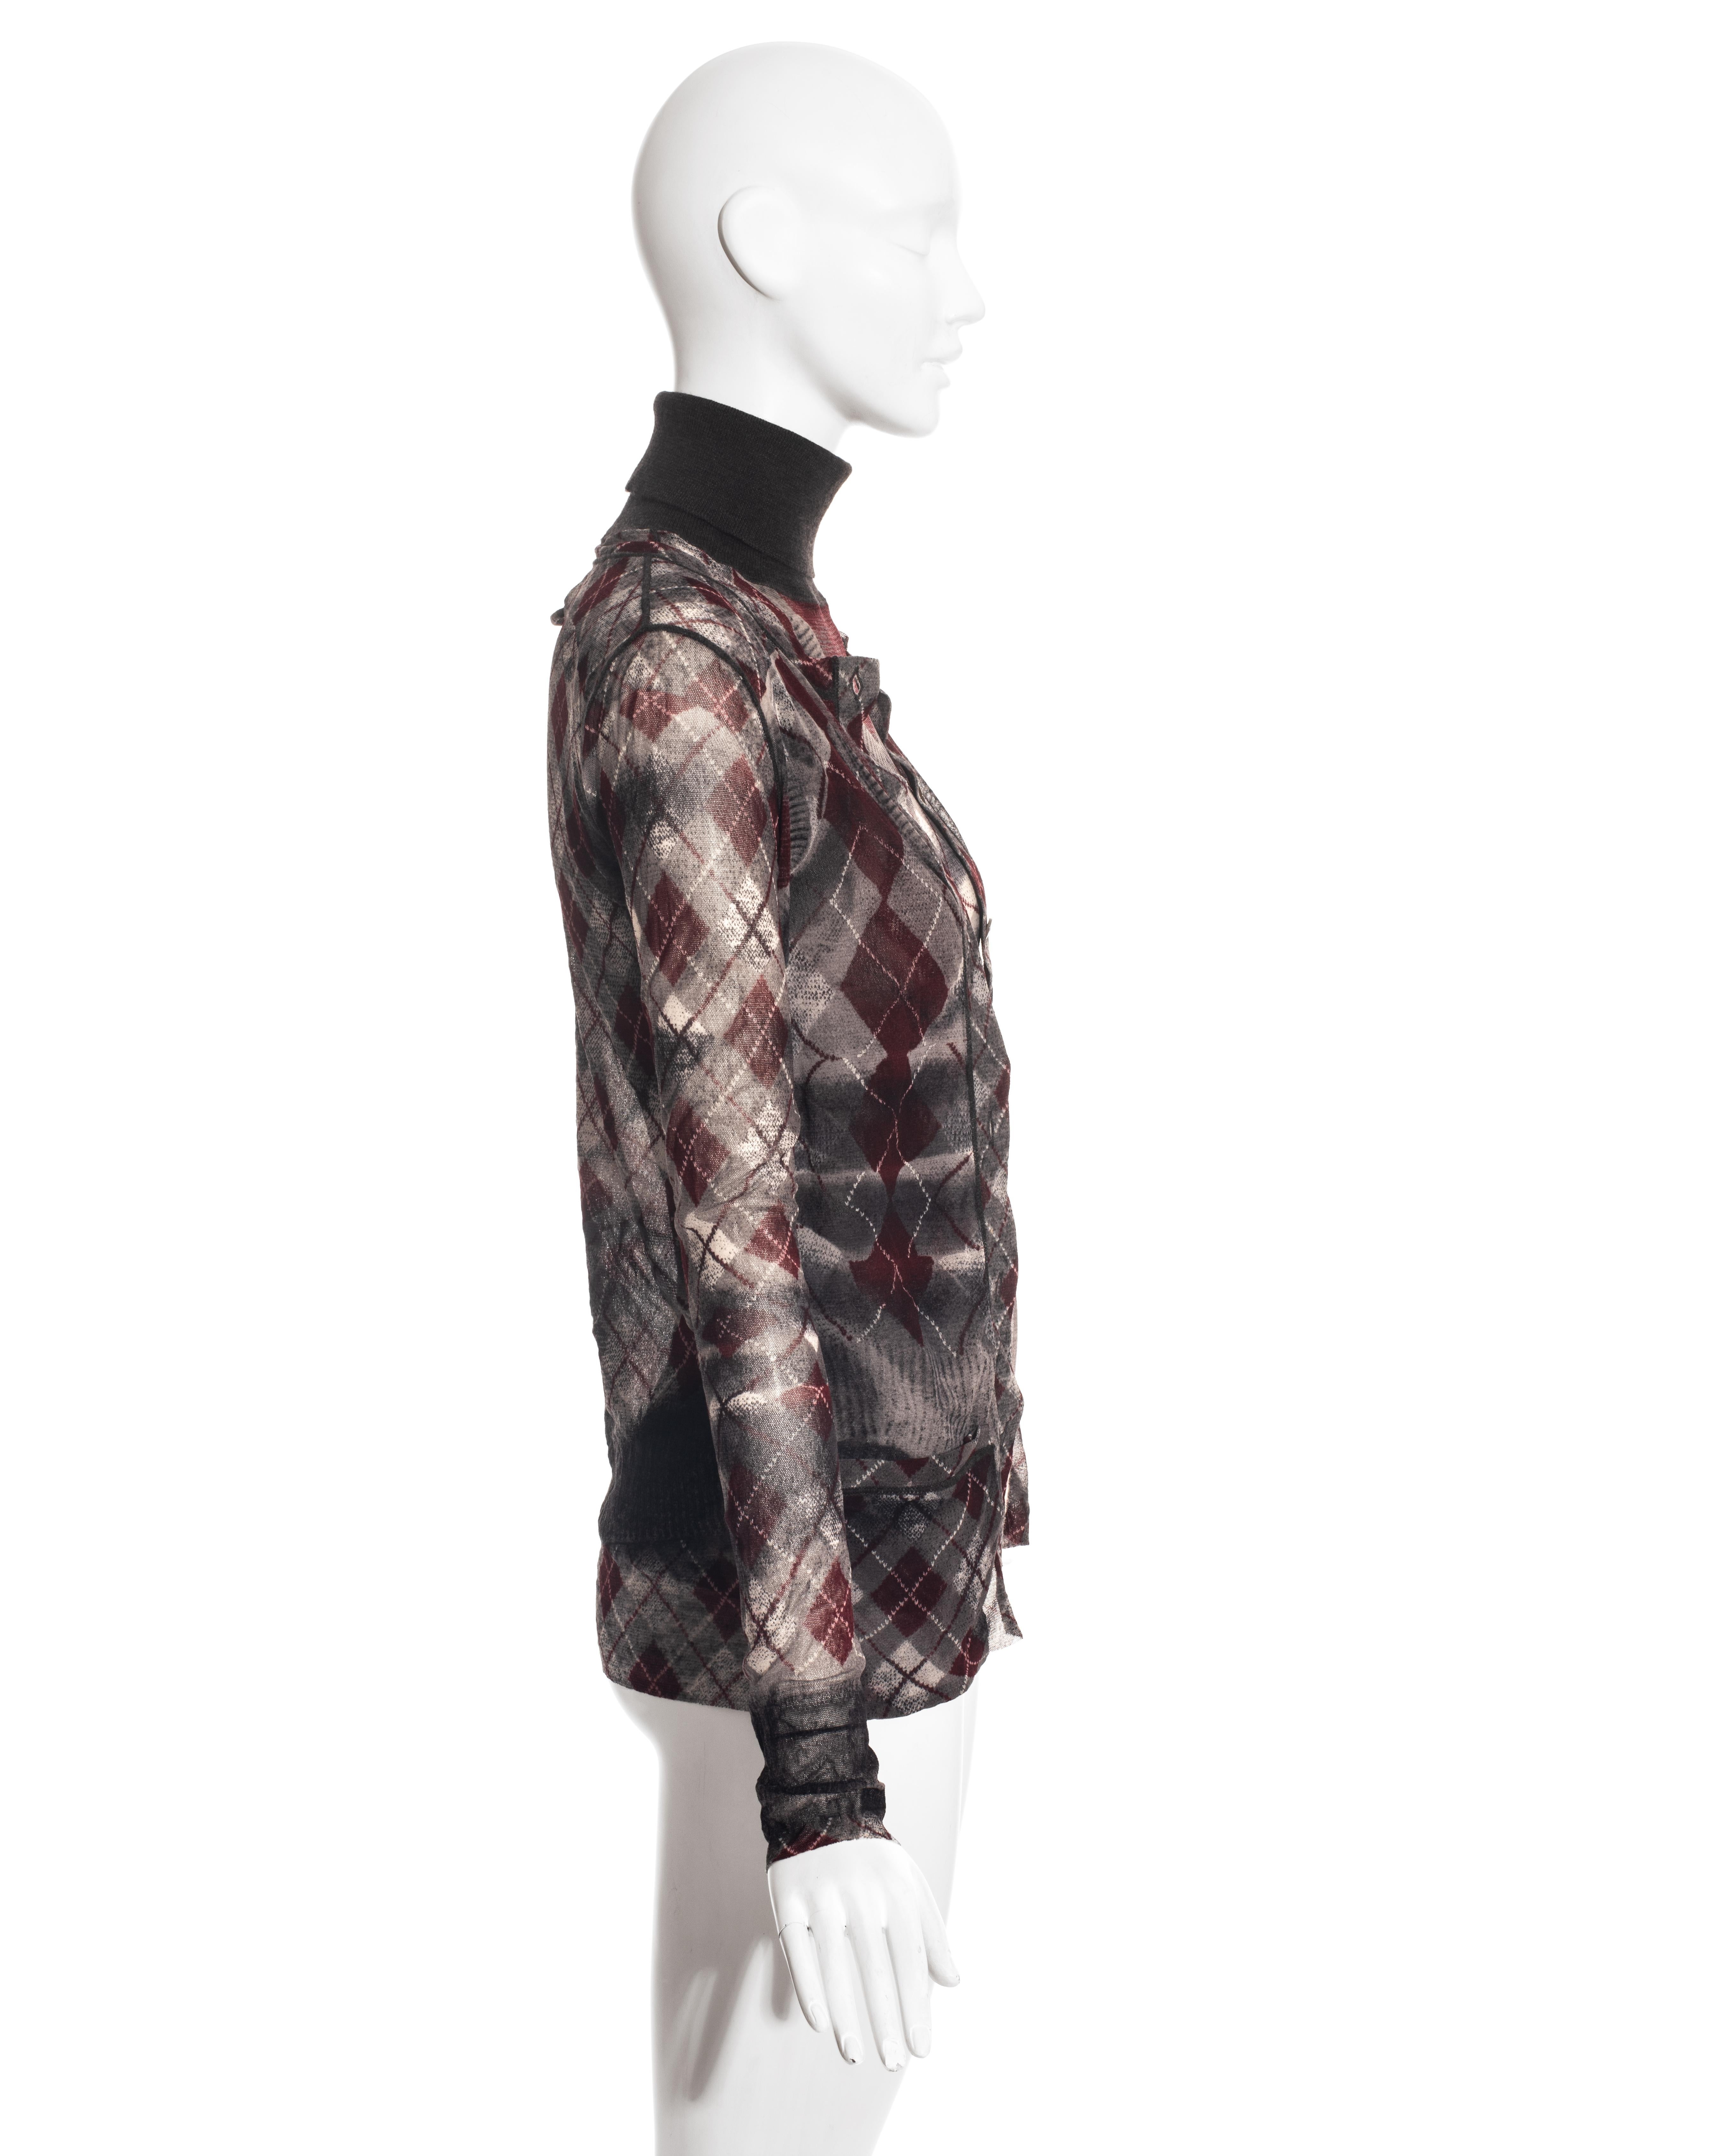 Black Jean Paul Gaultier argyle print mesh cardigan and sweater vest set, fw 2004